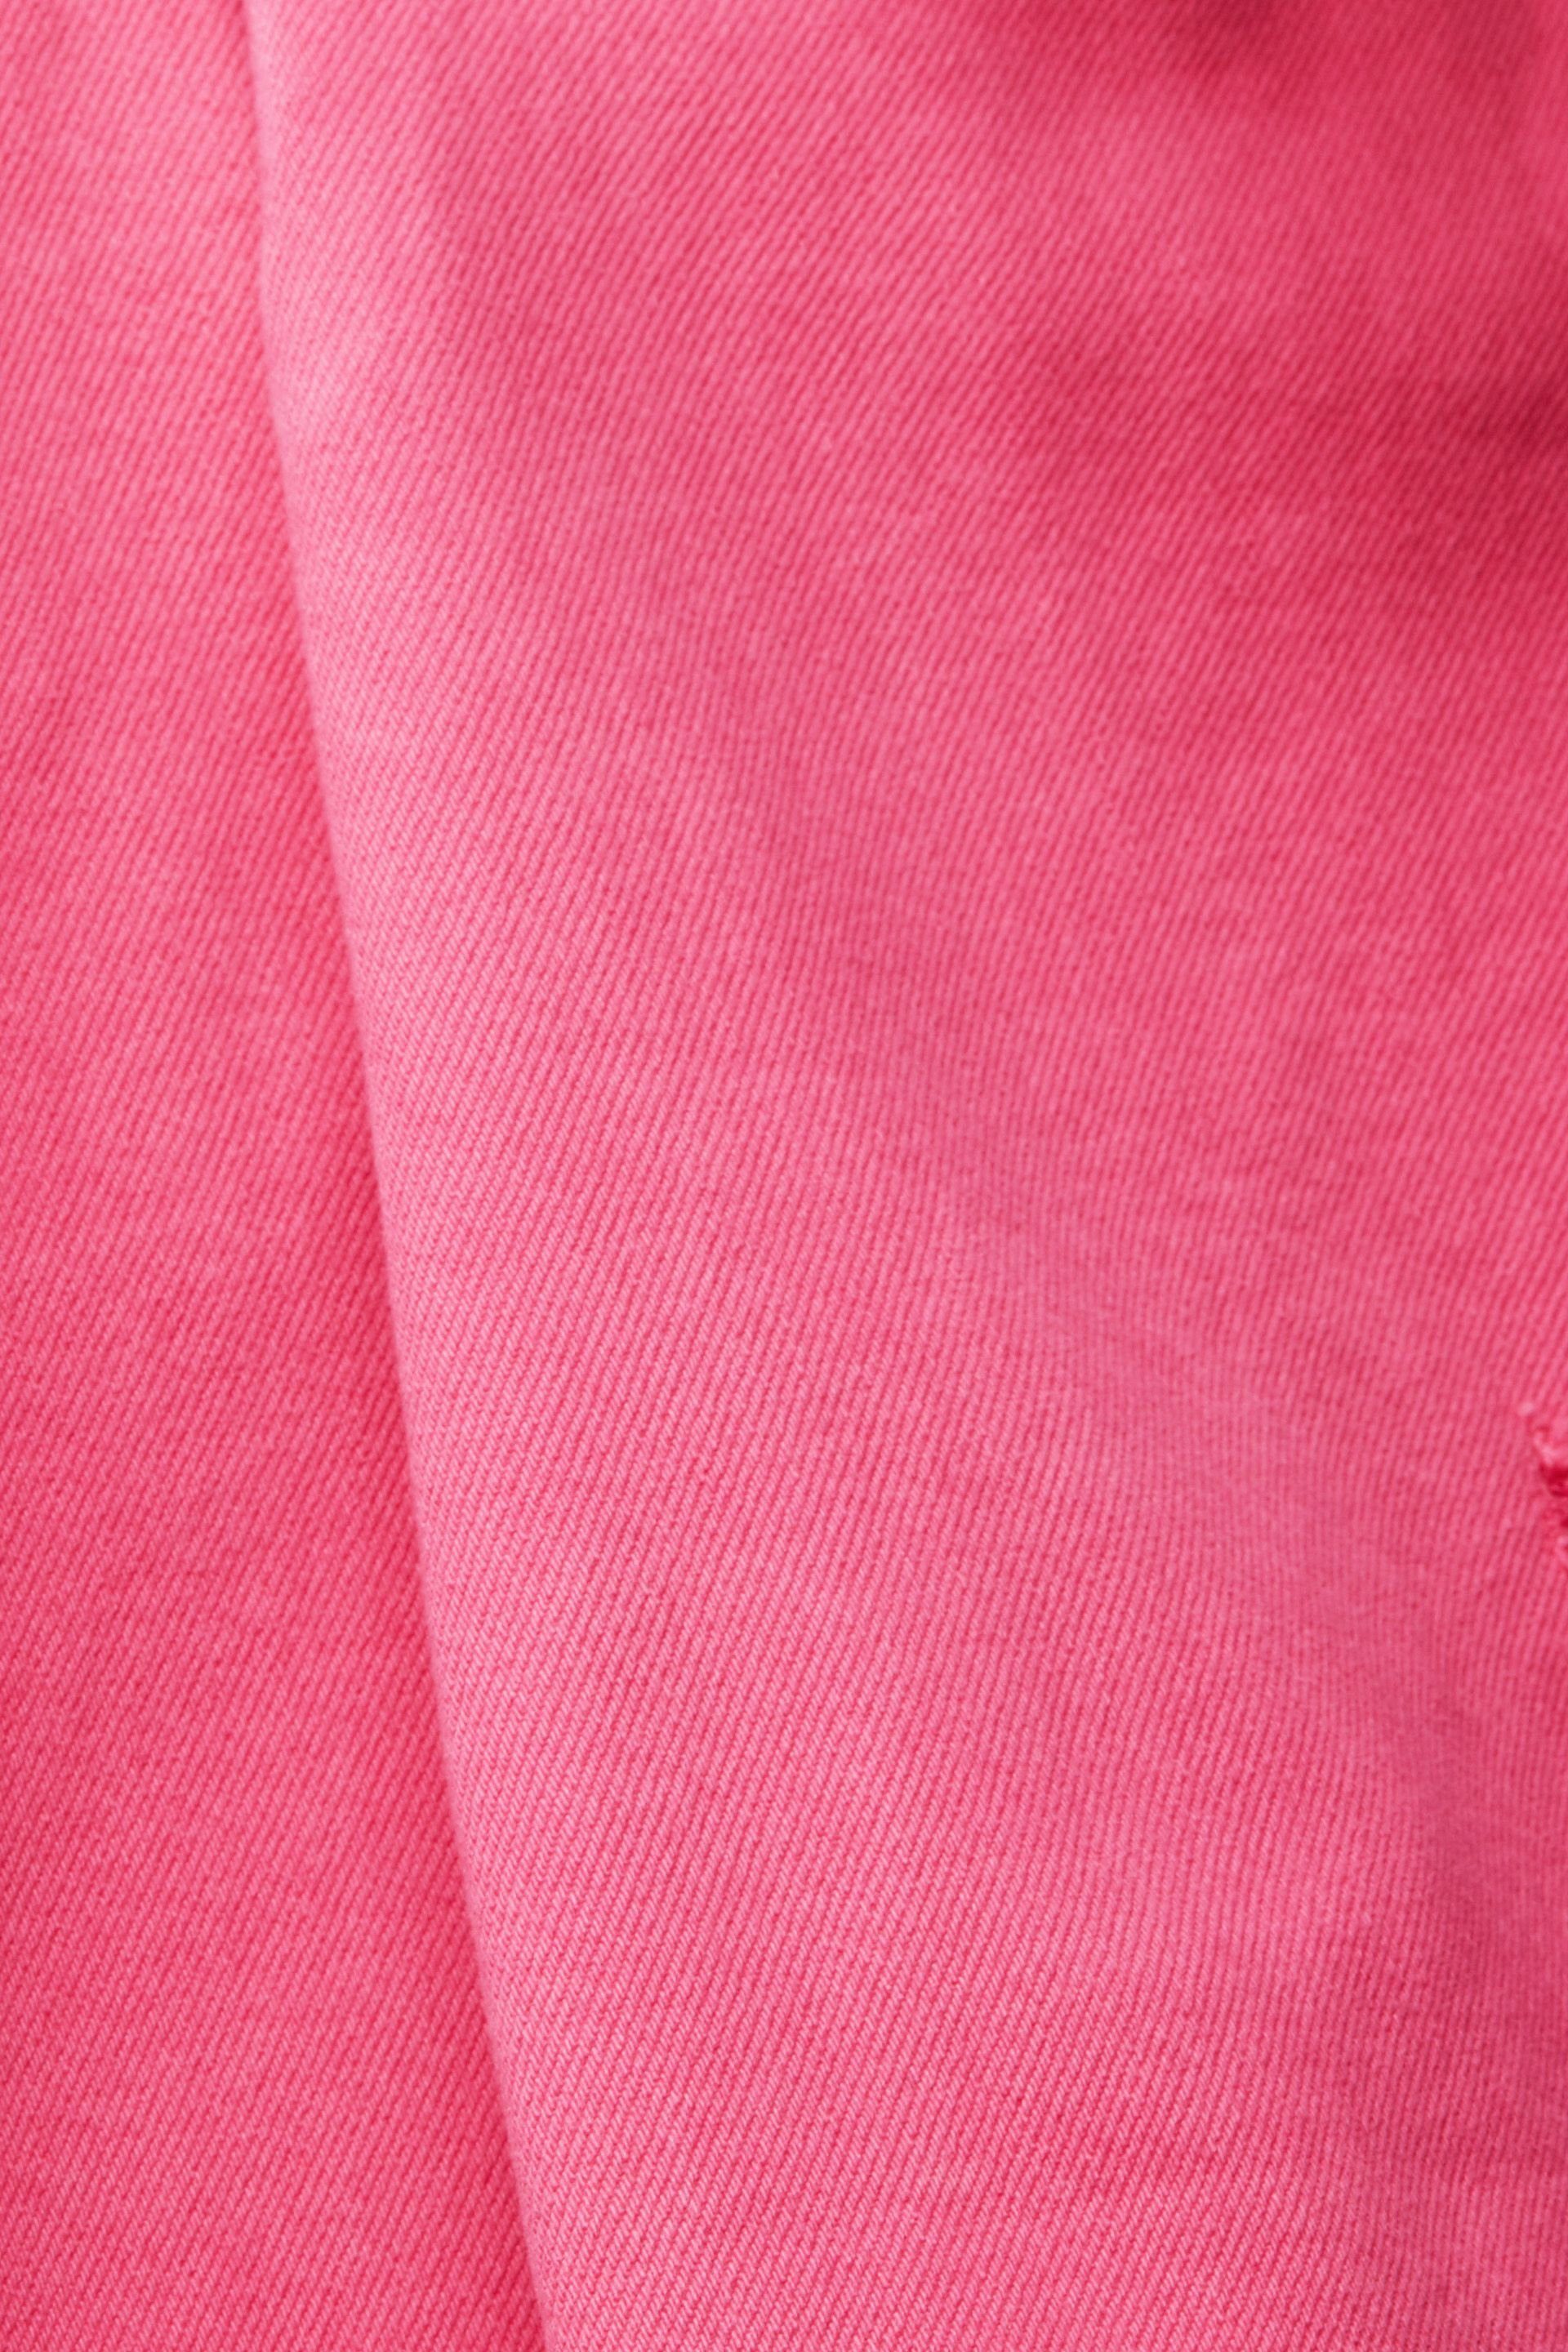 Esprit Shorts pink fuchsia